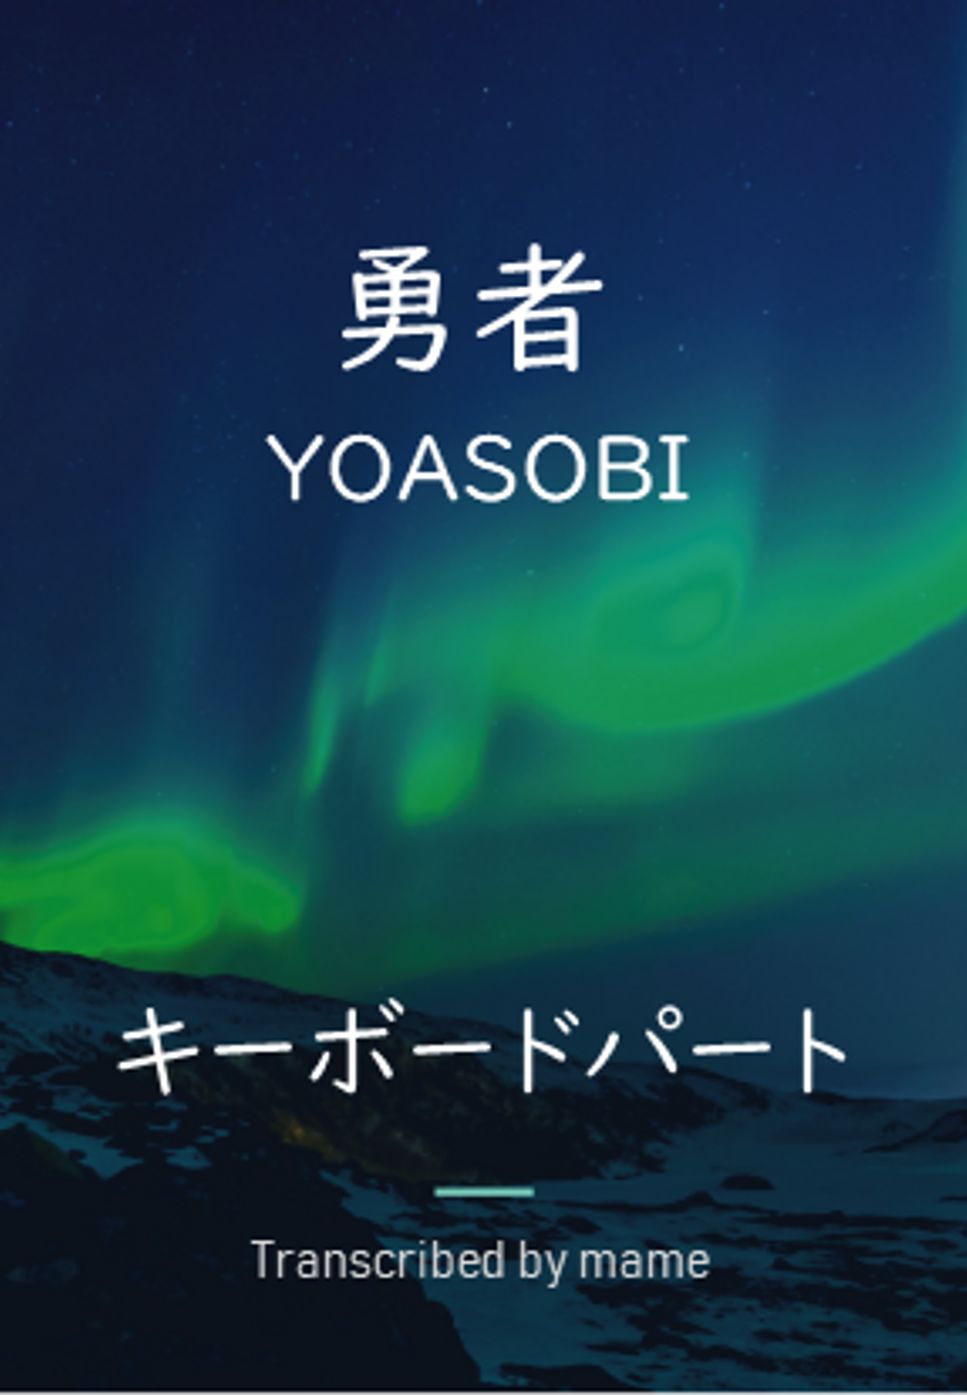 YOASOBI - 勇者 (keyboard part) by mame